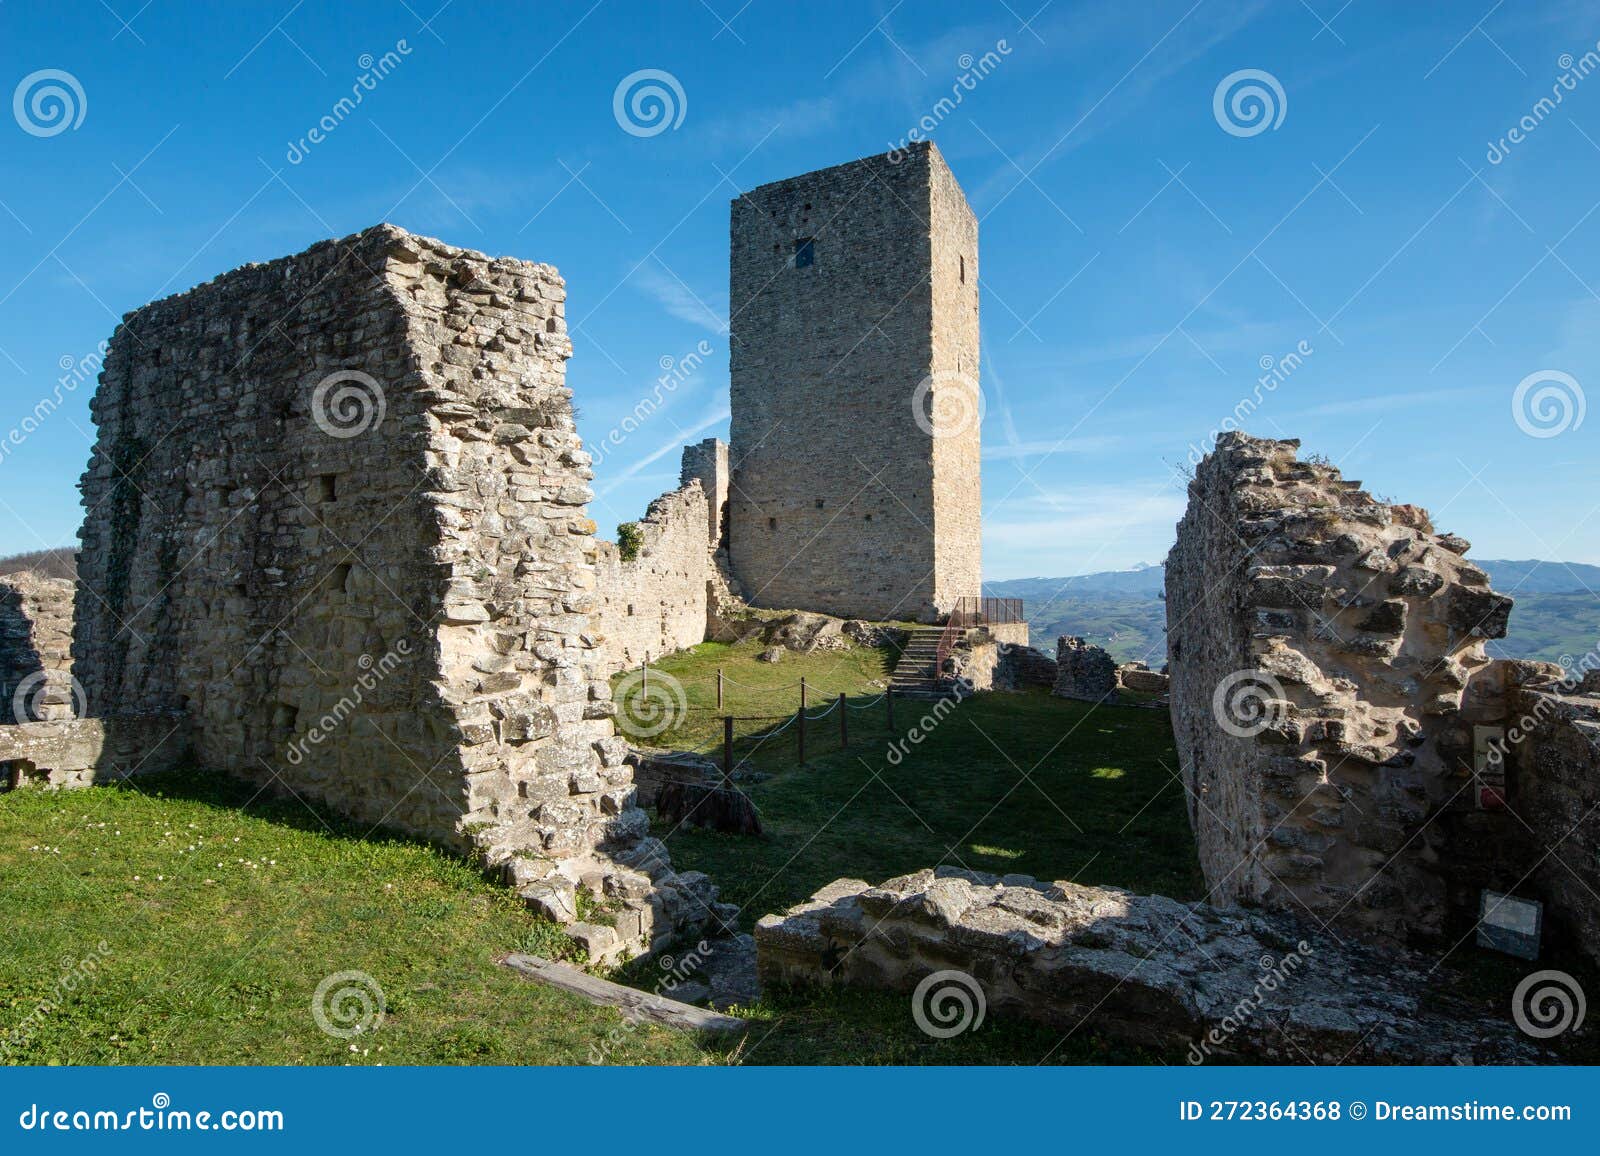 castle of carpineti bismantova stone lands of matilde di canossa tuscan emilian national park italy